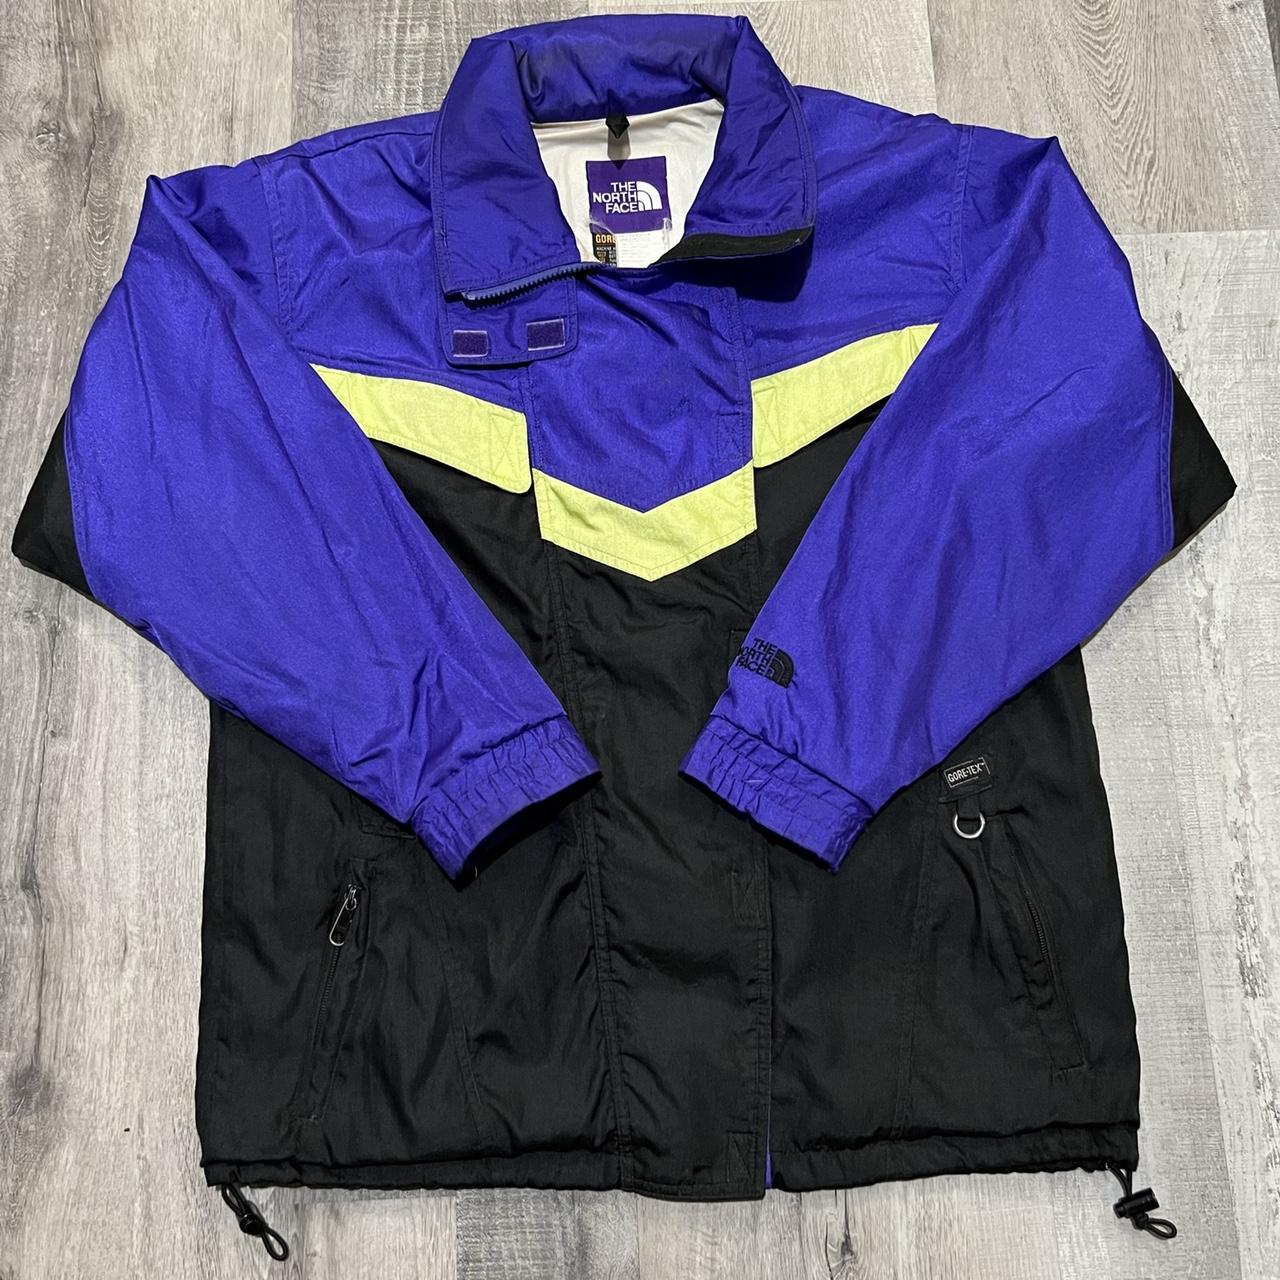 The North Face Purple Label Men's Jacket